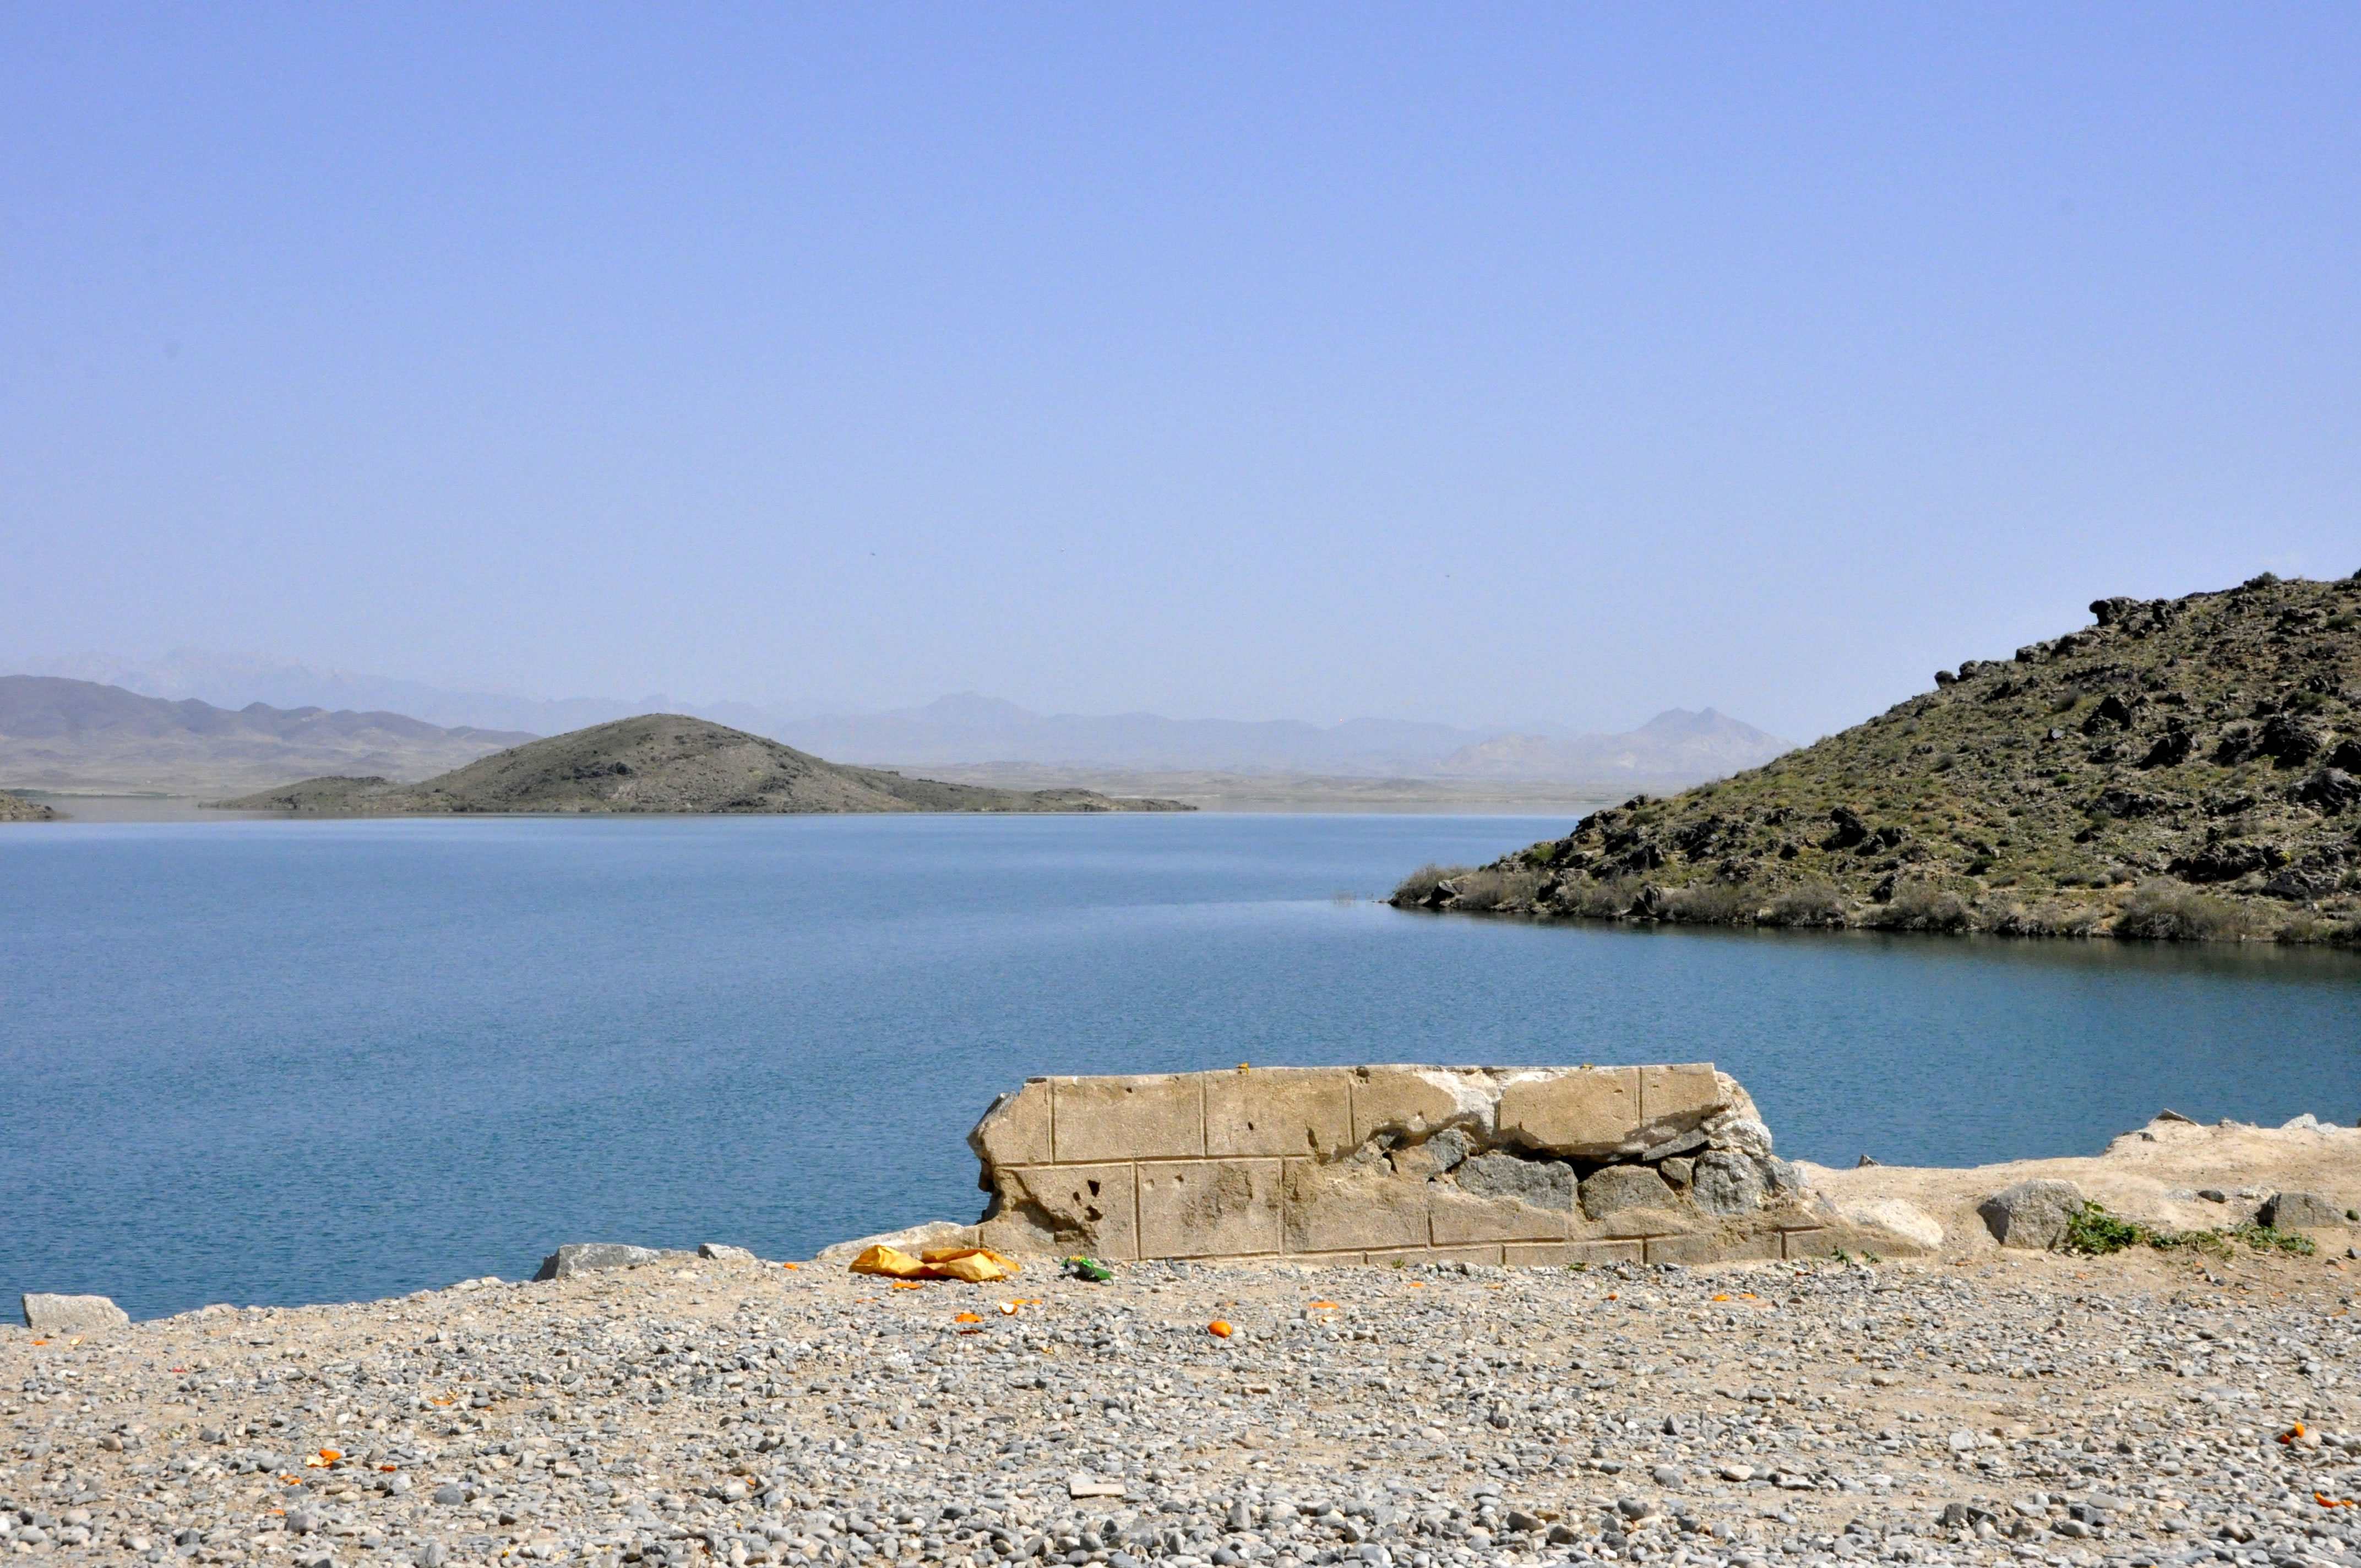 Mission to Dahla Dam